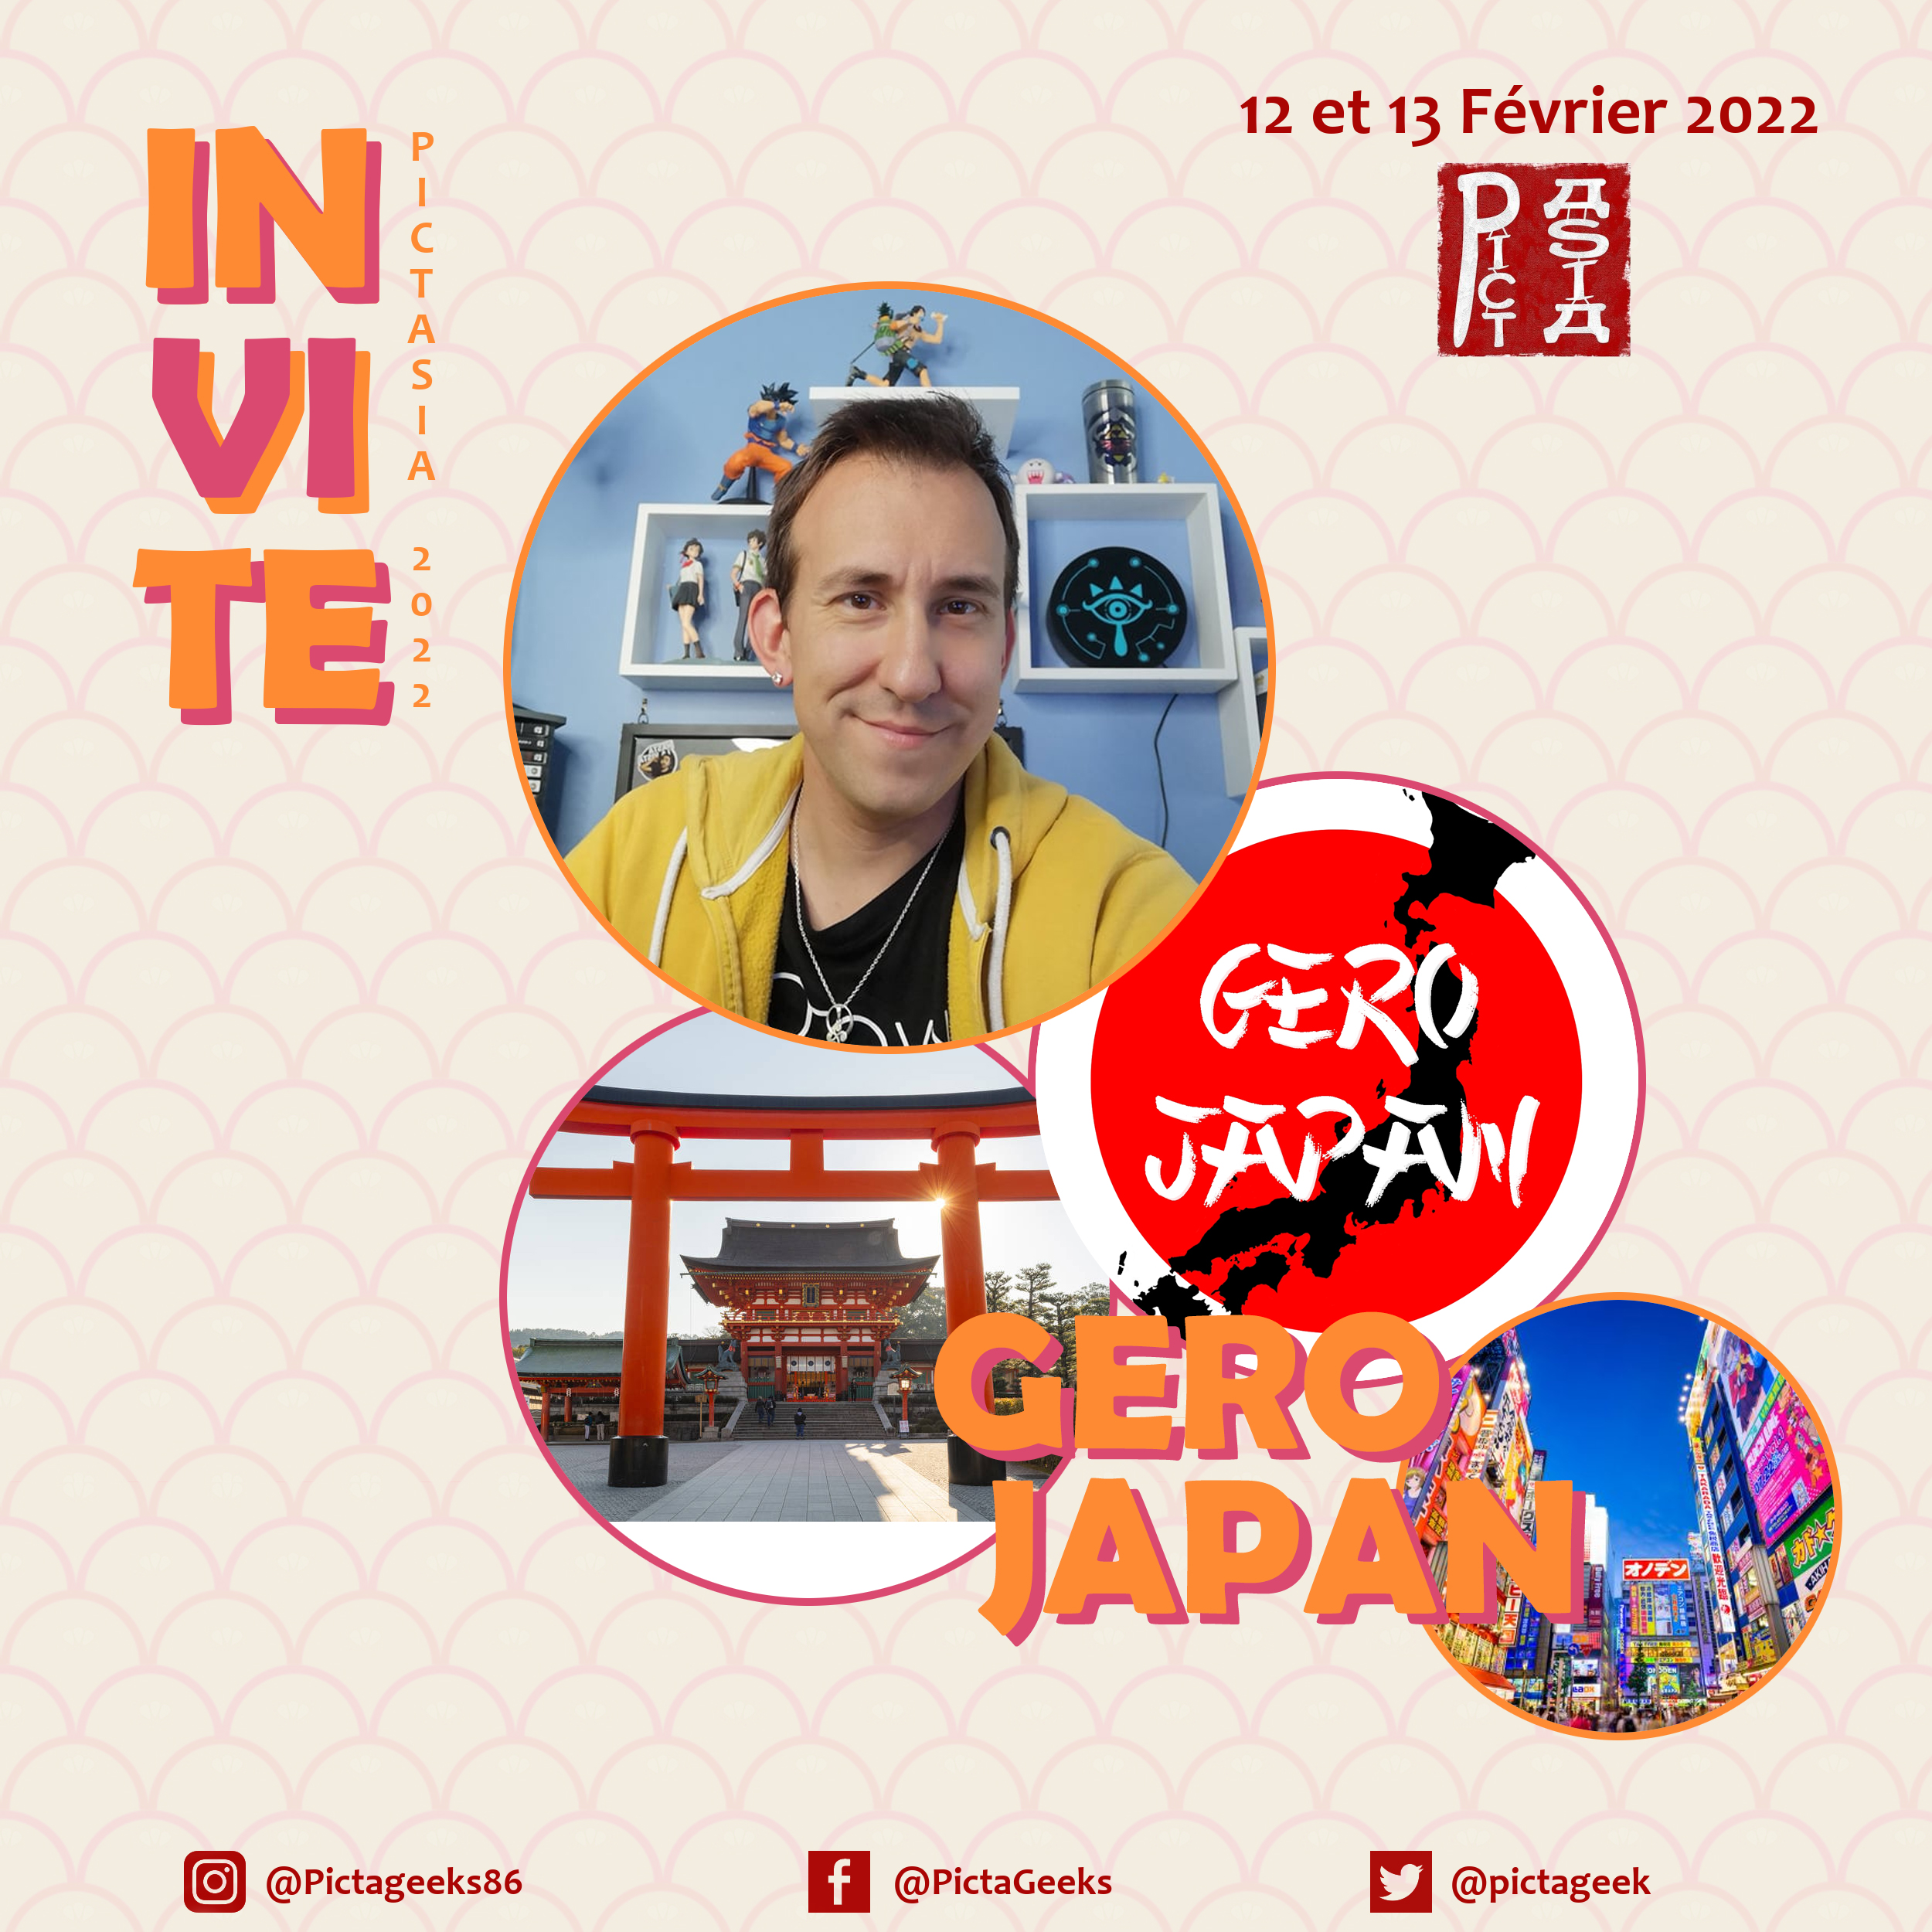 Gero Japan, Pictasia, poitiers, manga, japon, festival, culture